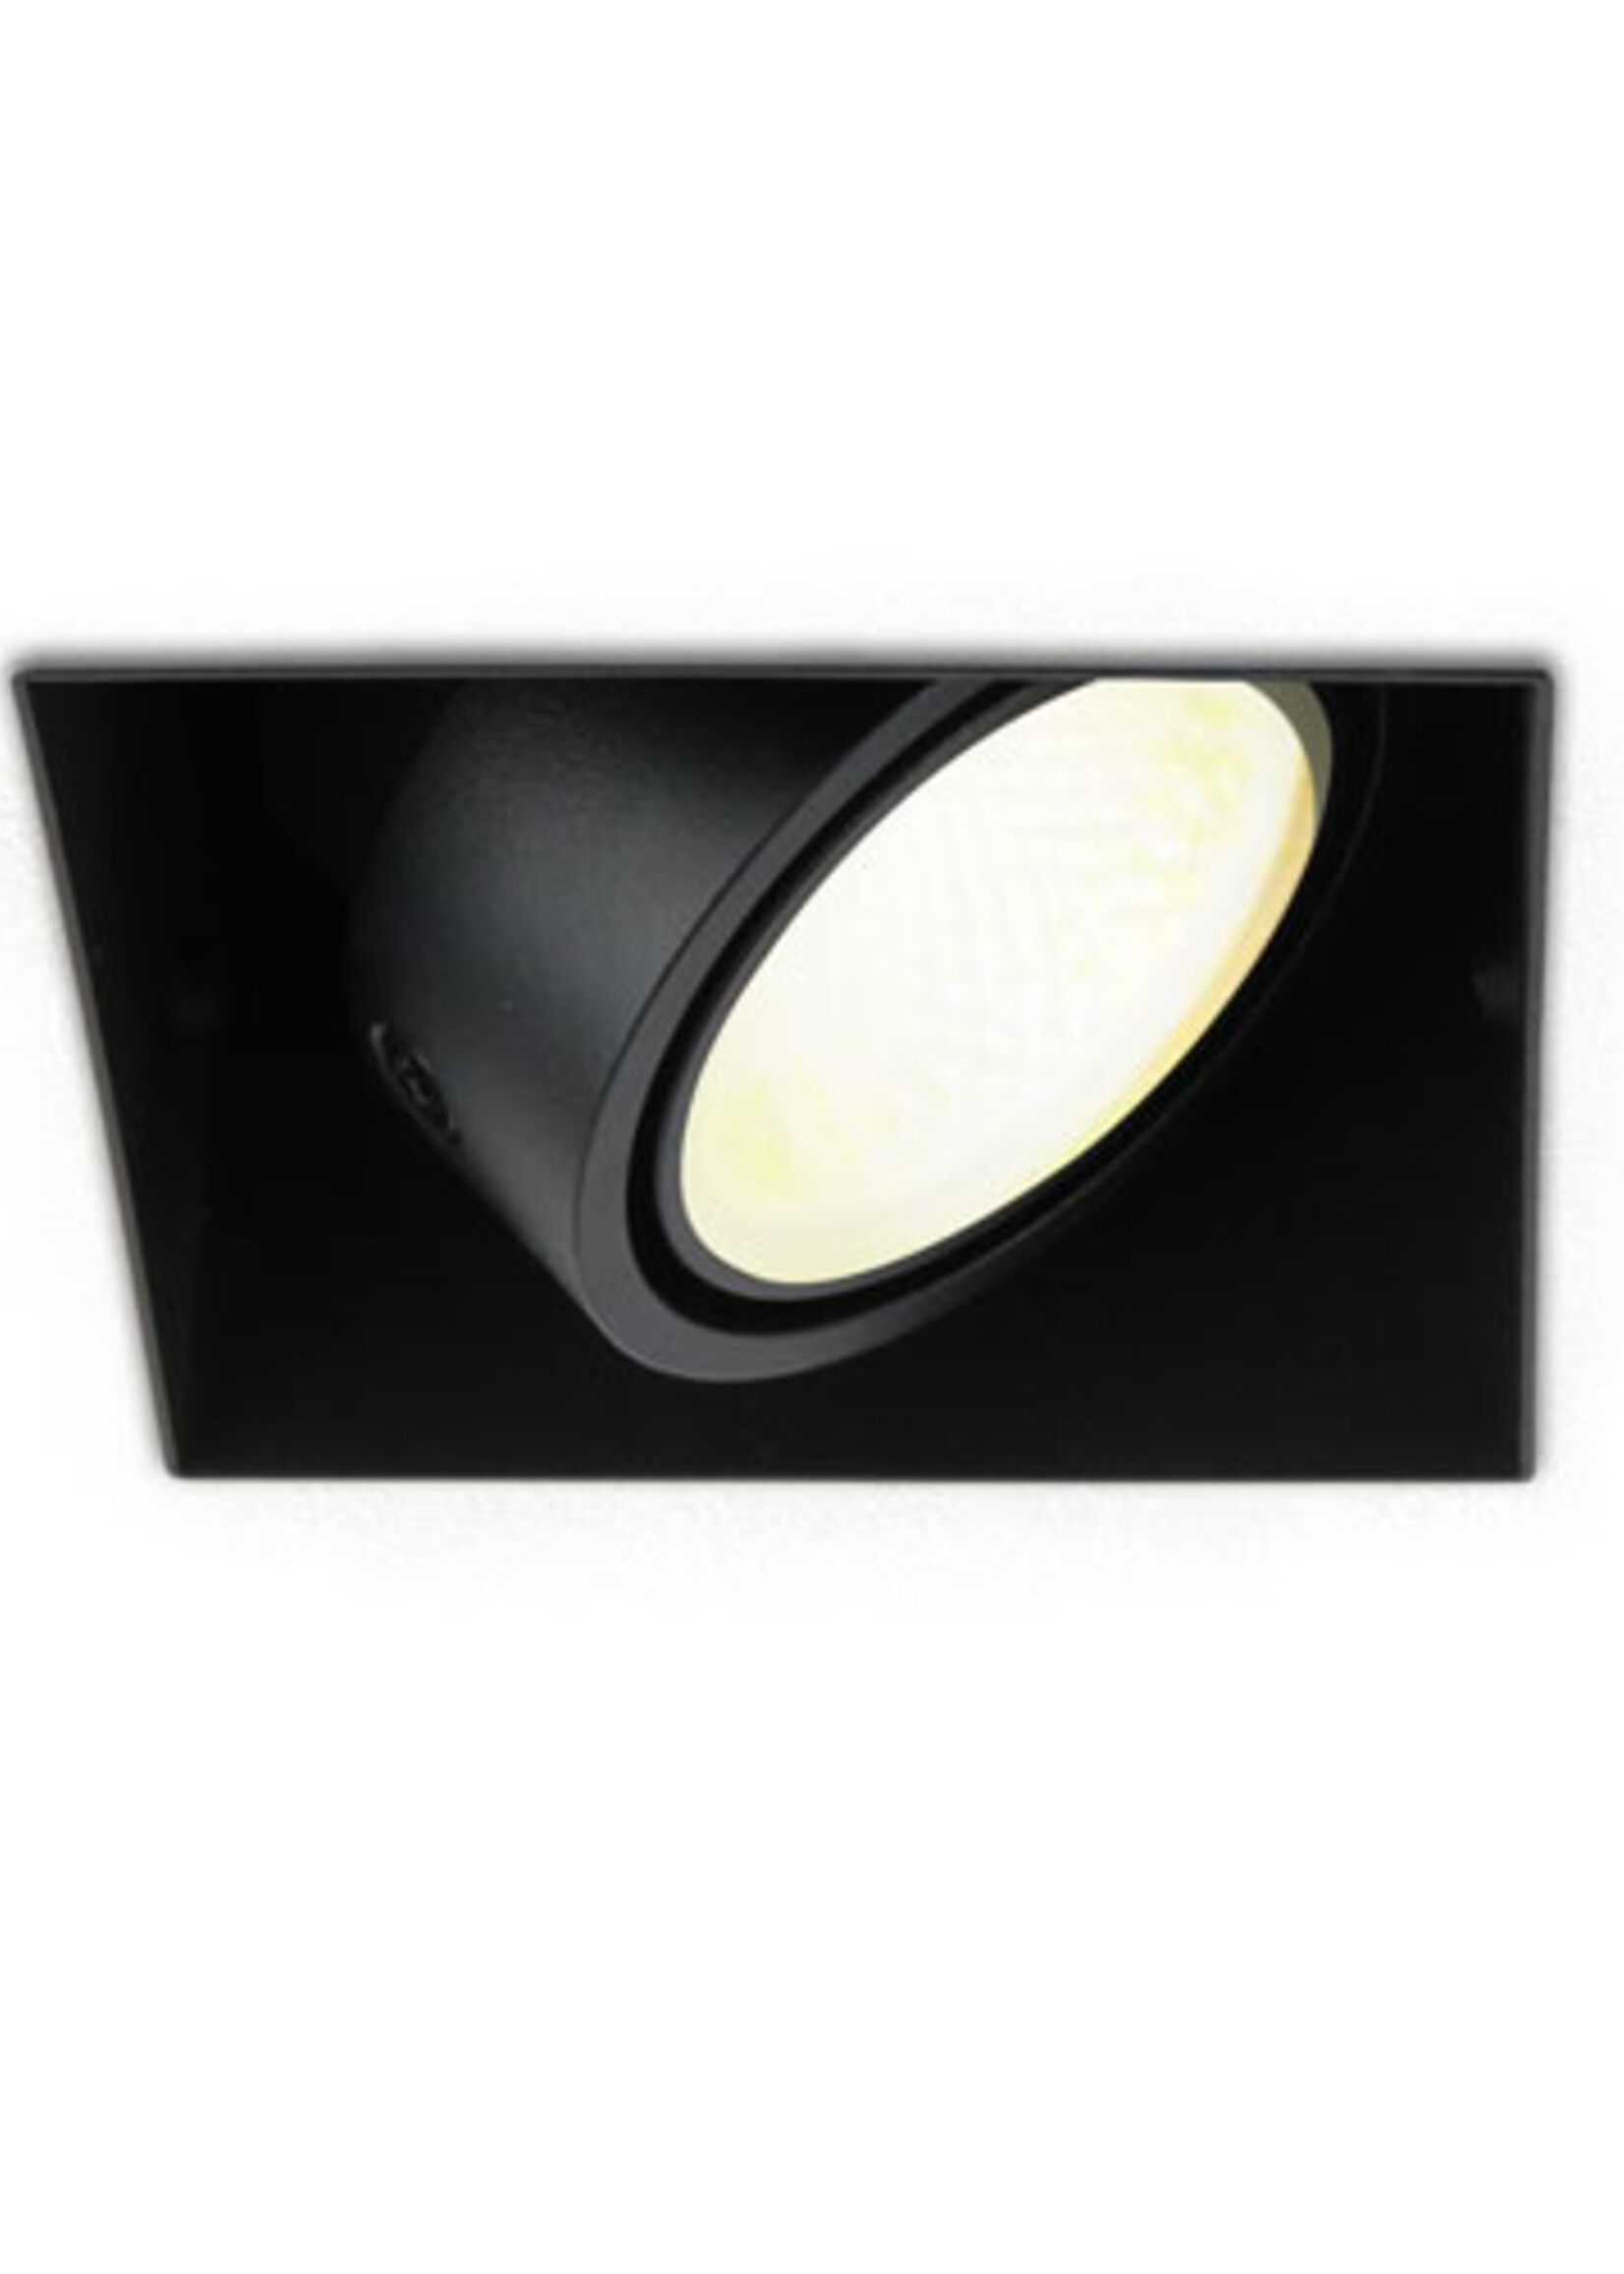 SOLISTECH Black LED Downlight 6W Trimless 3000K warm white square 89x89mm tiltable rotatable